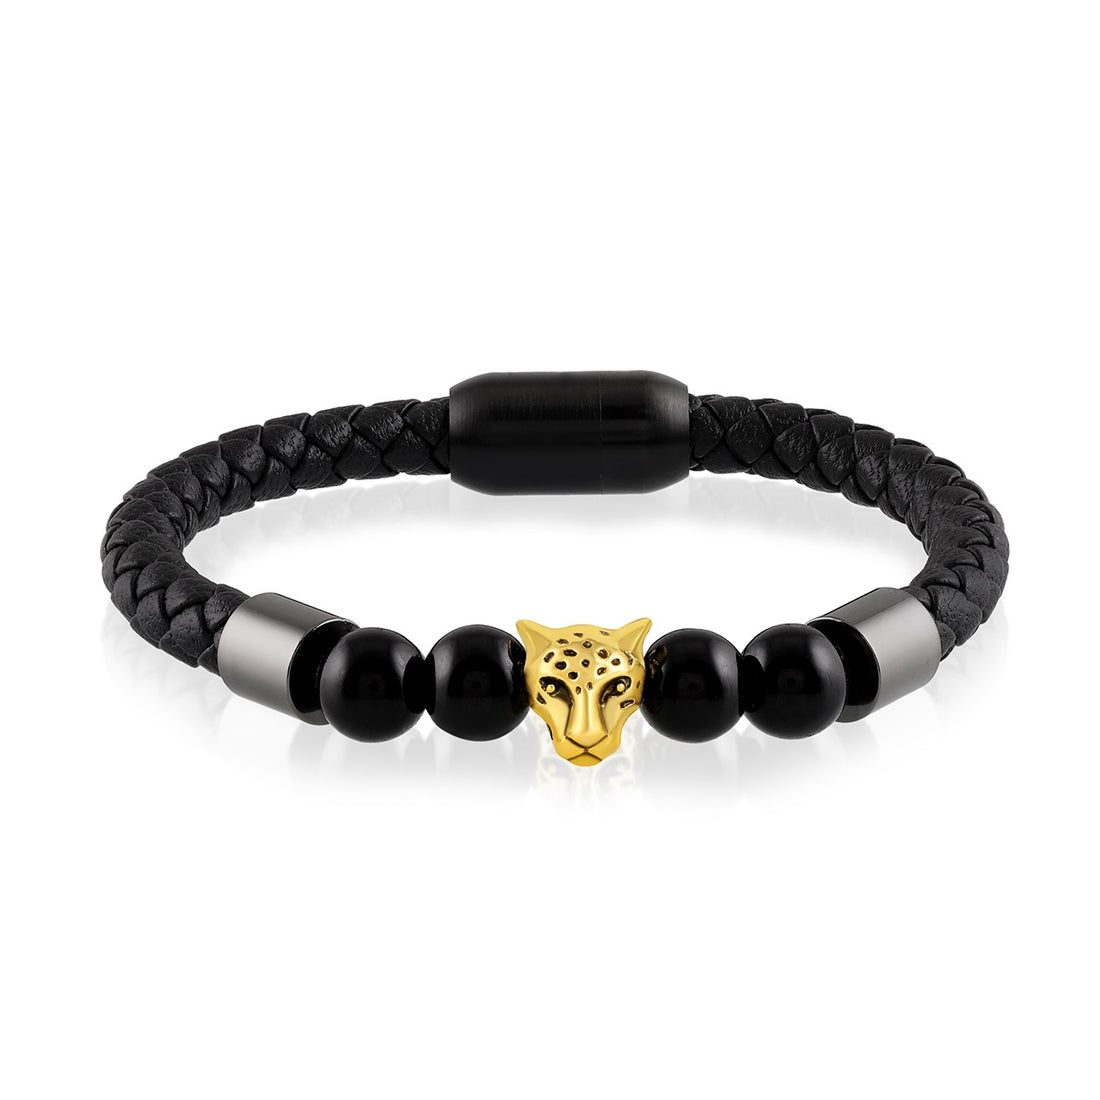 Leather wristband with jaguar charm